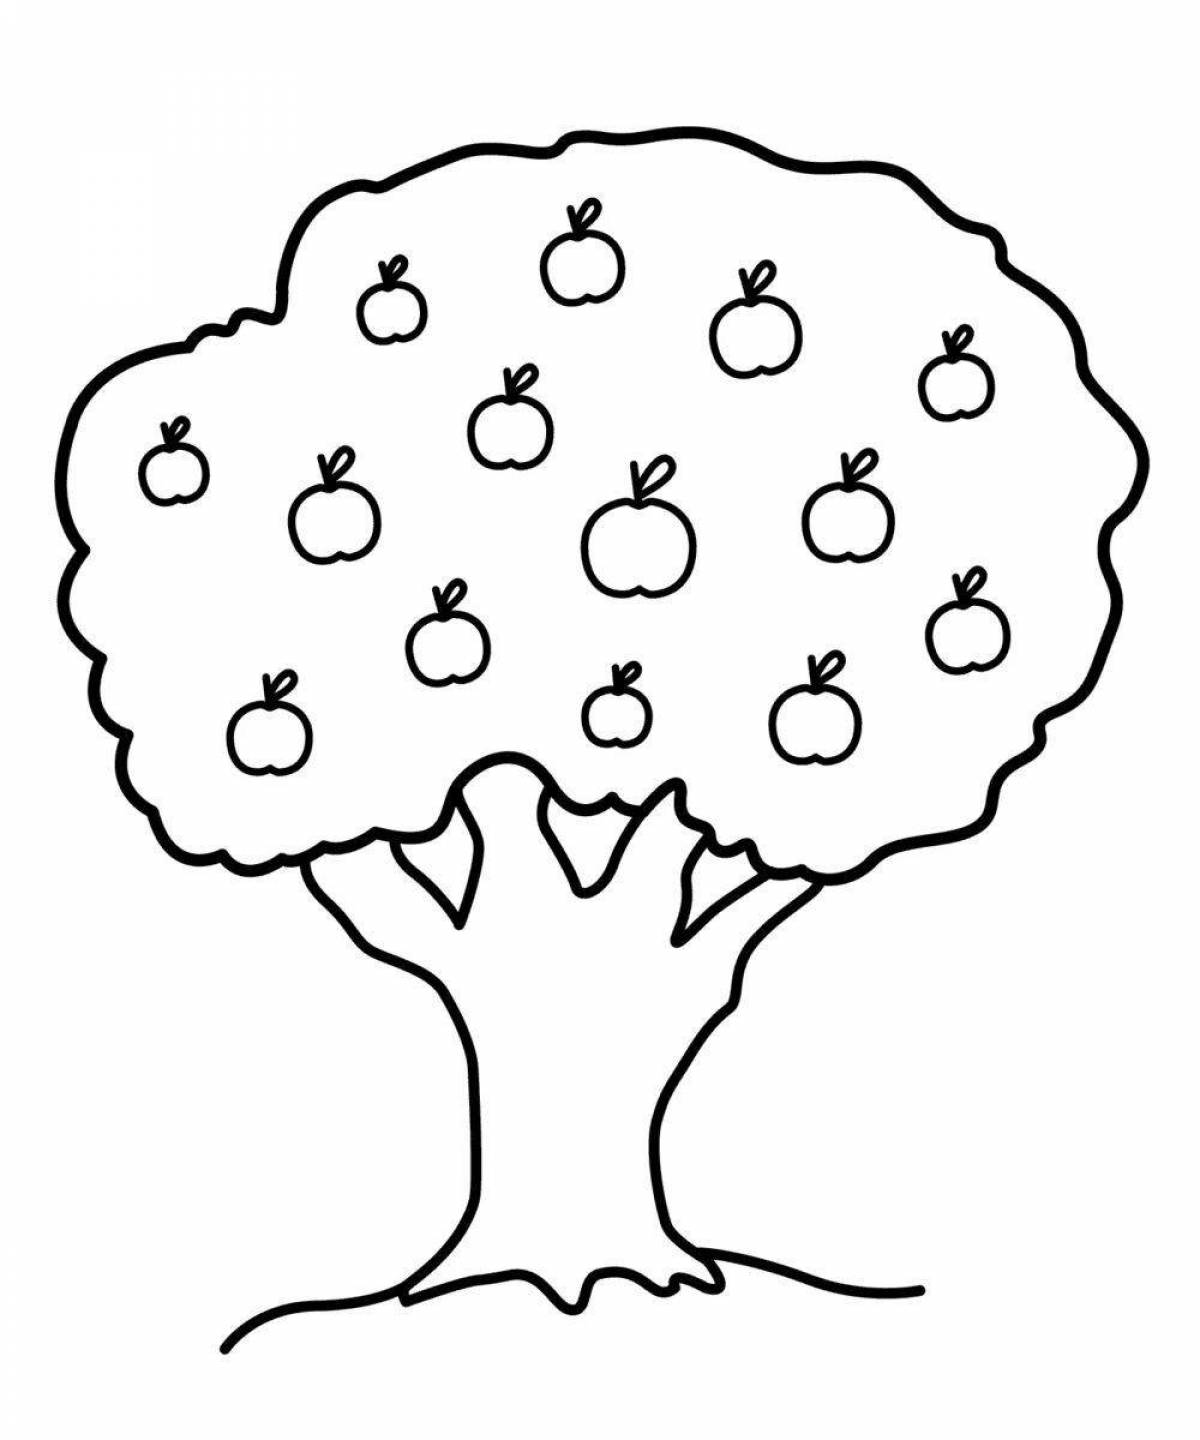 Joyful apple tree for kids